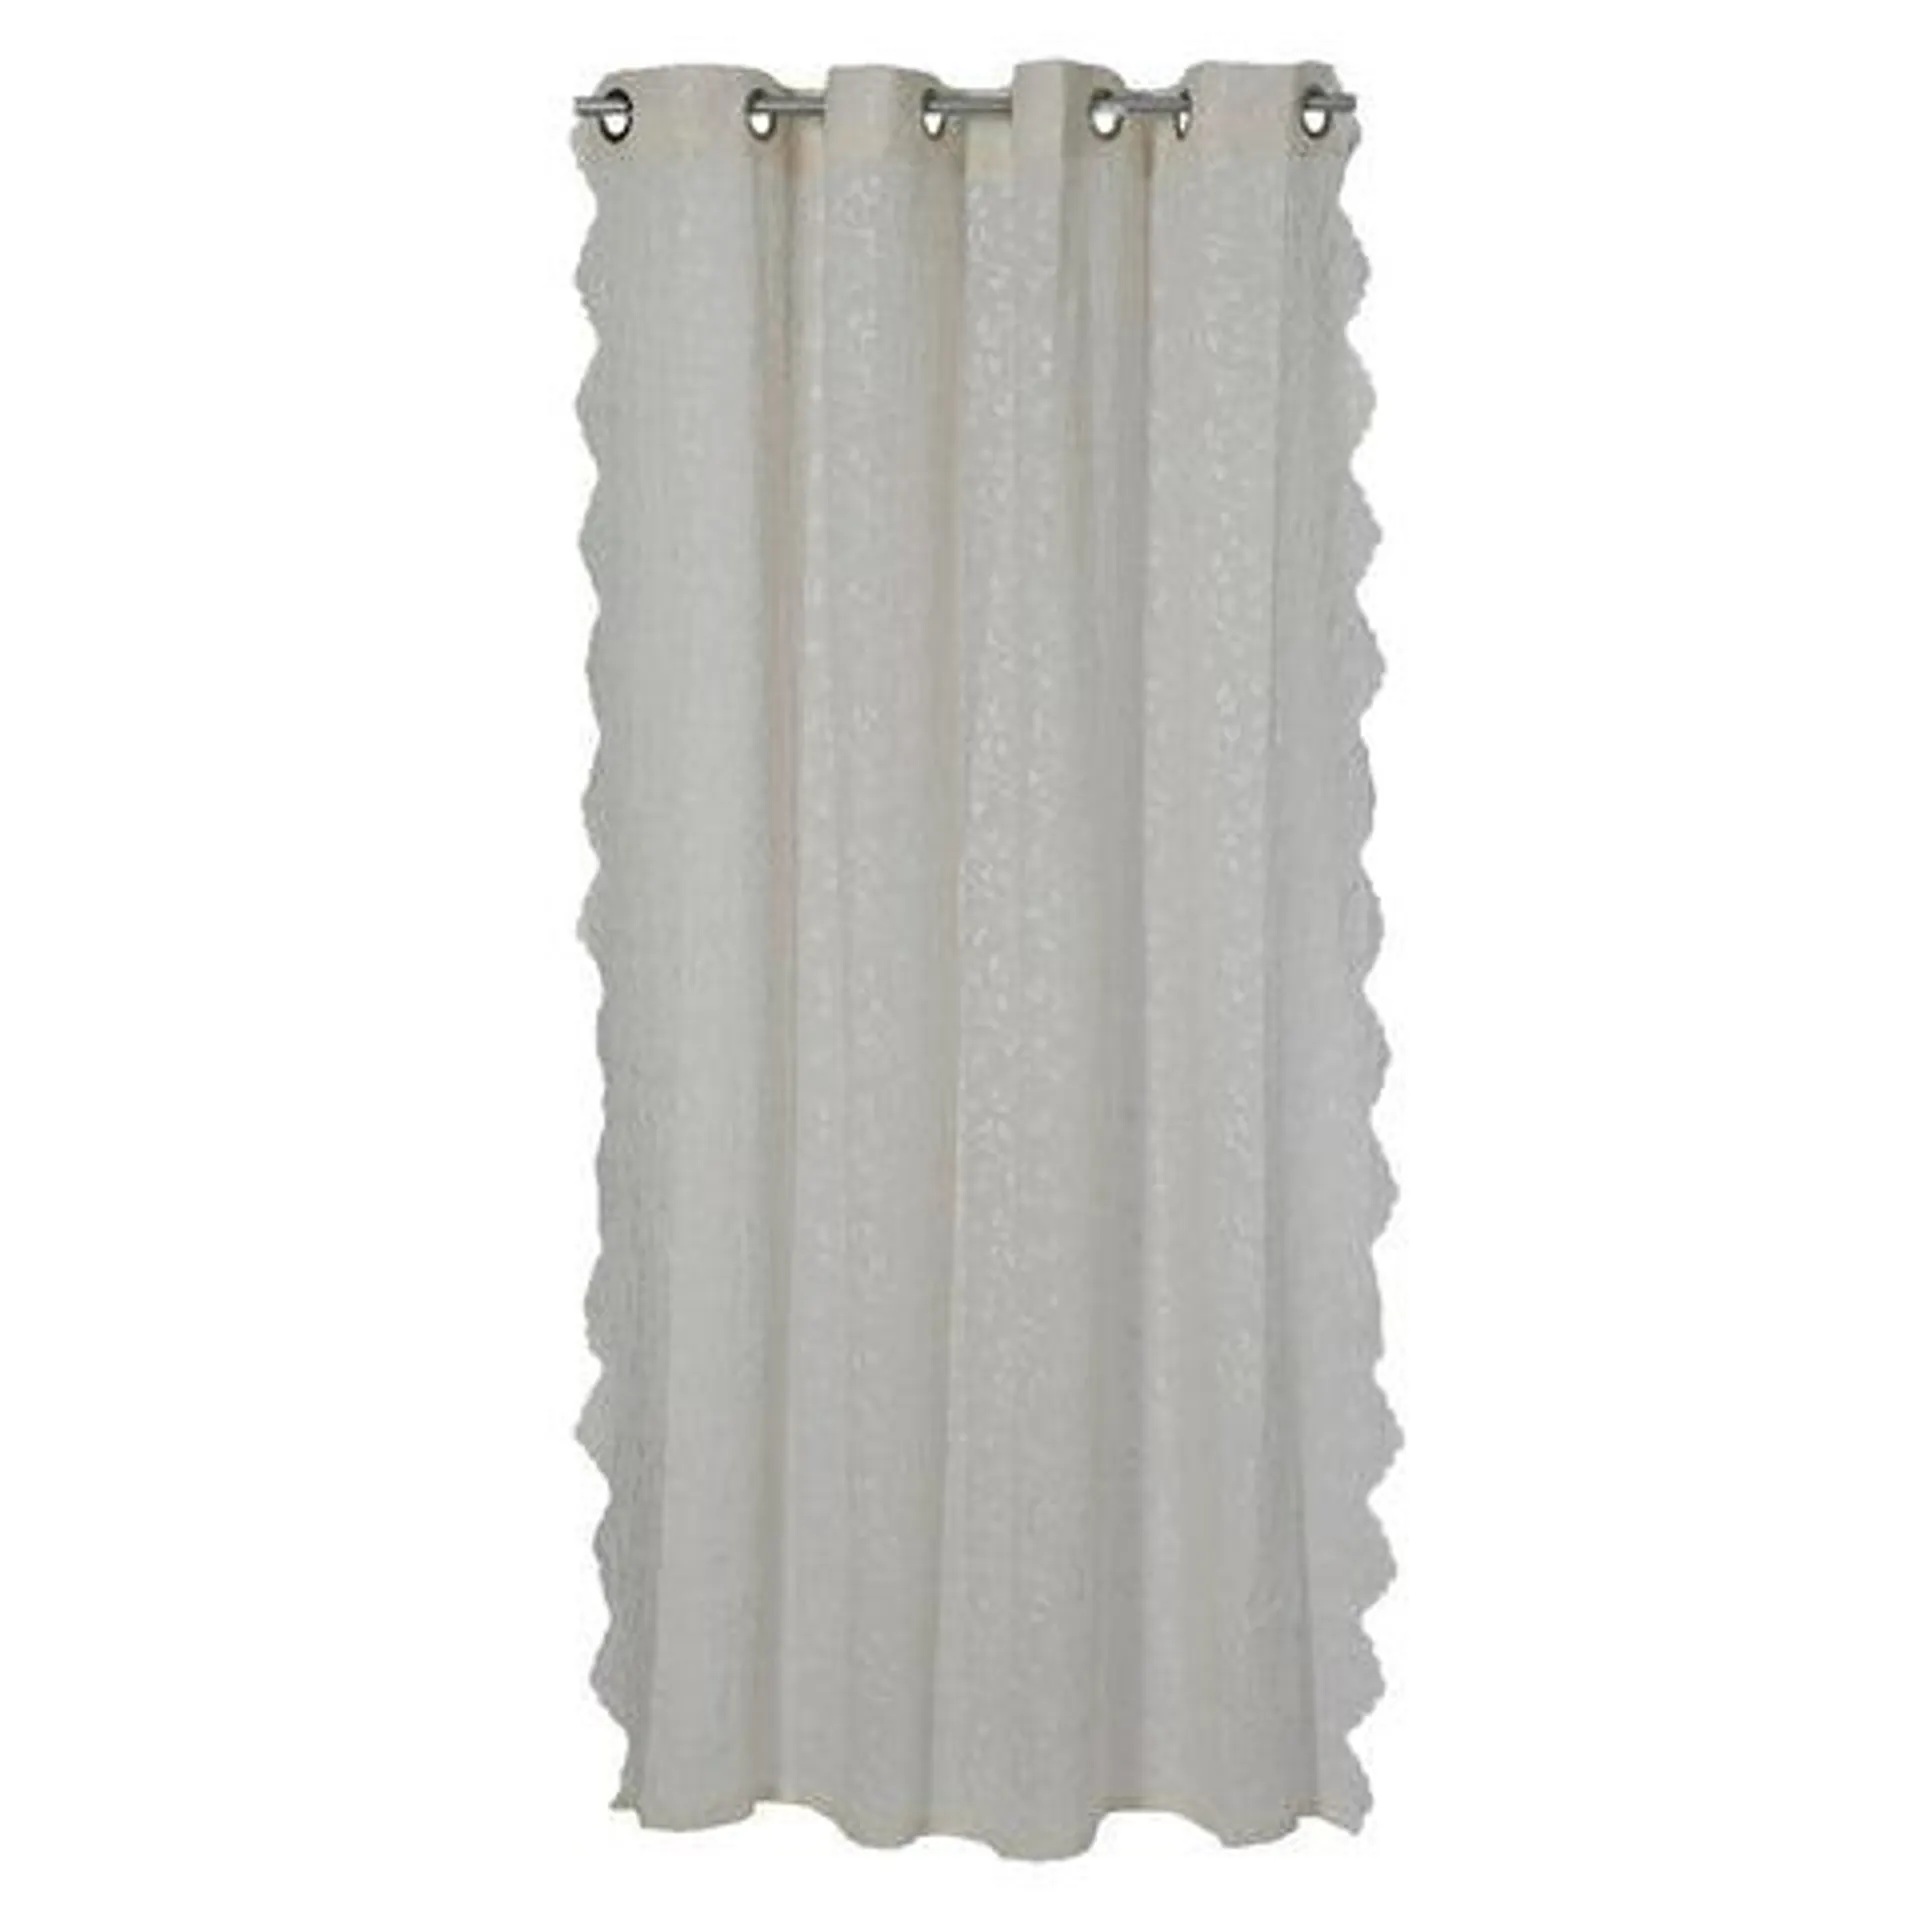 Eloise shower curtain 200X160 cm, Linen